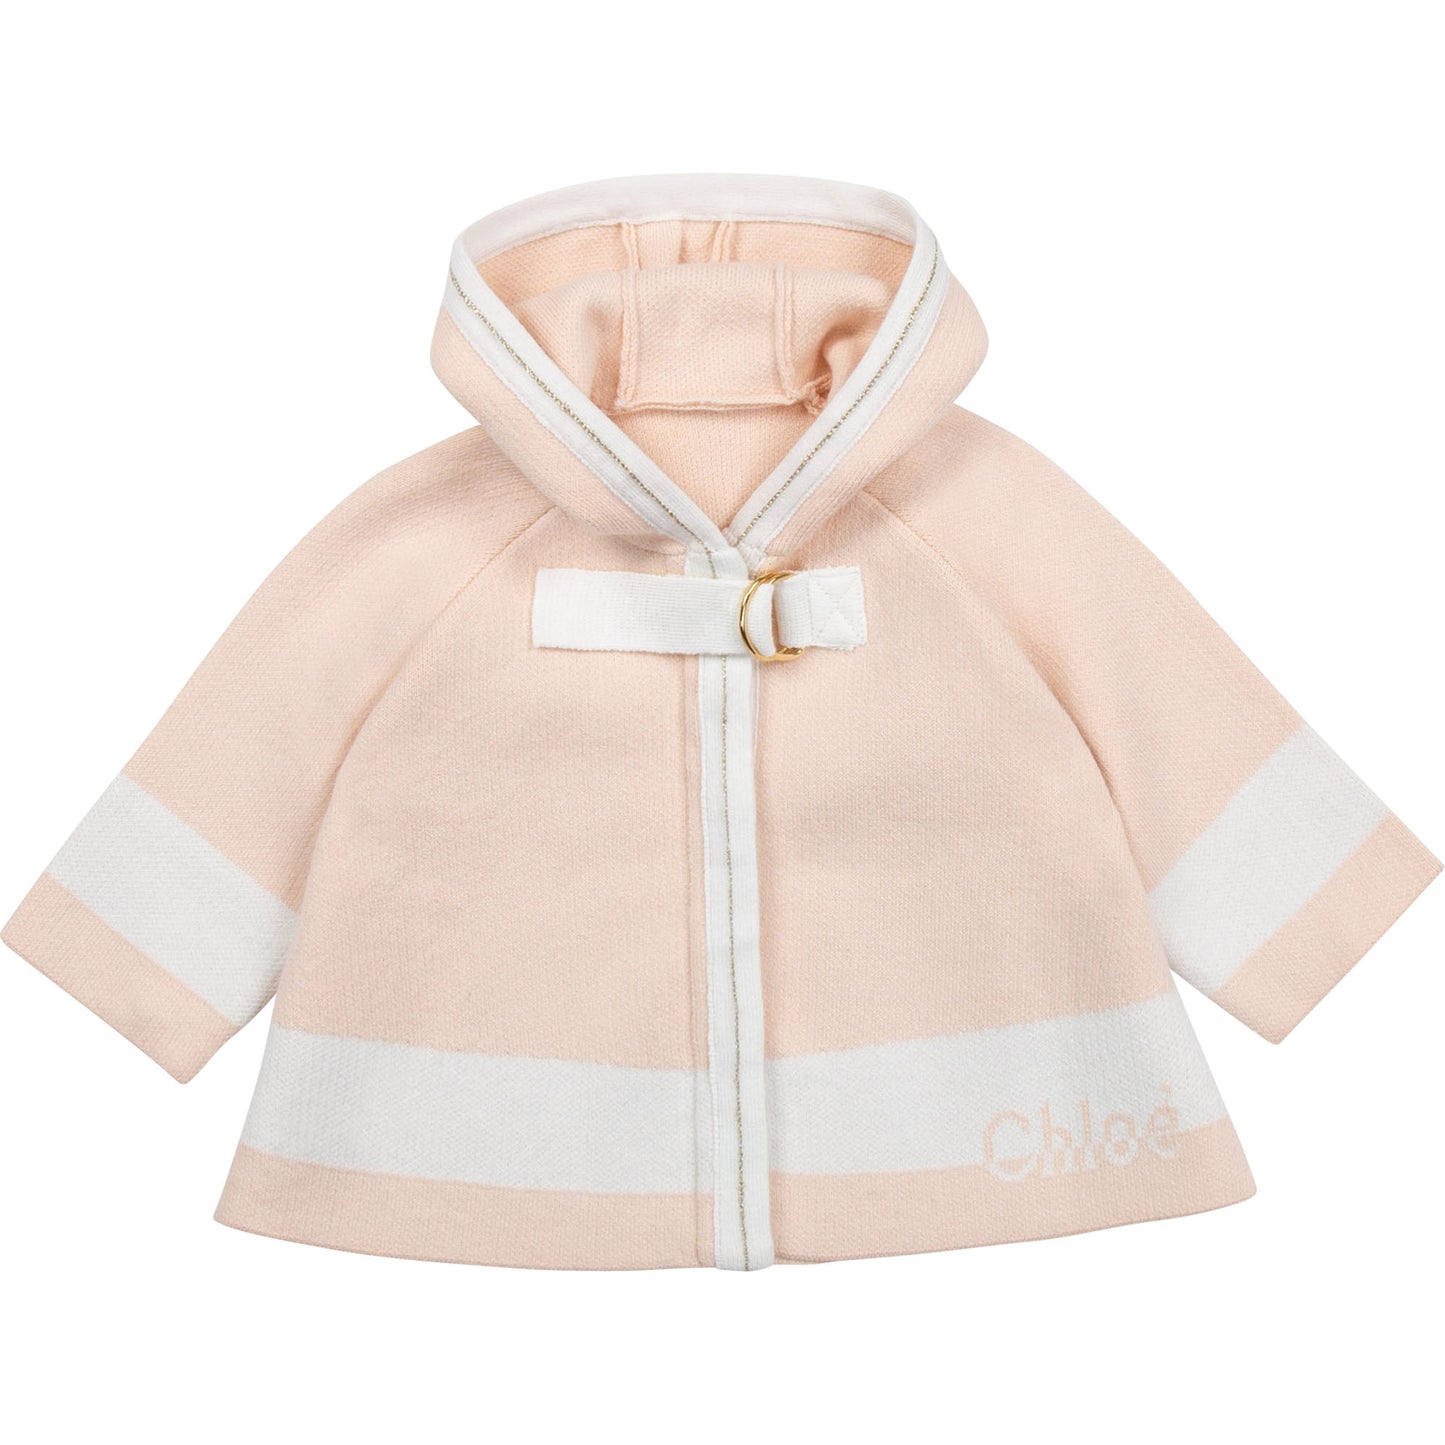 Chloe Knit Baby Jacket